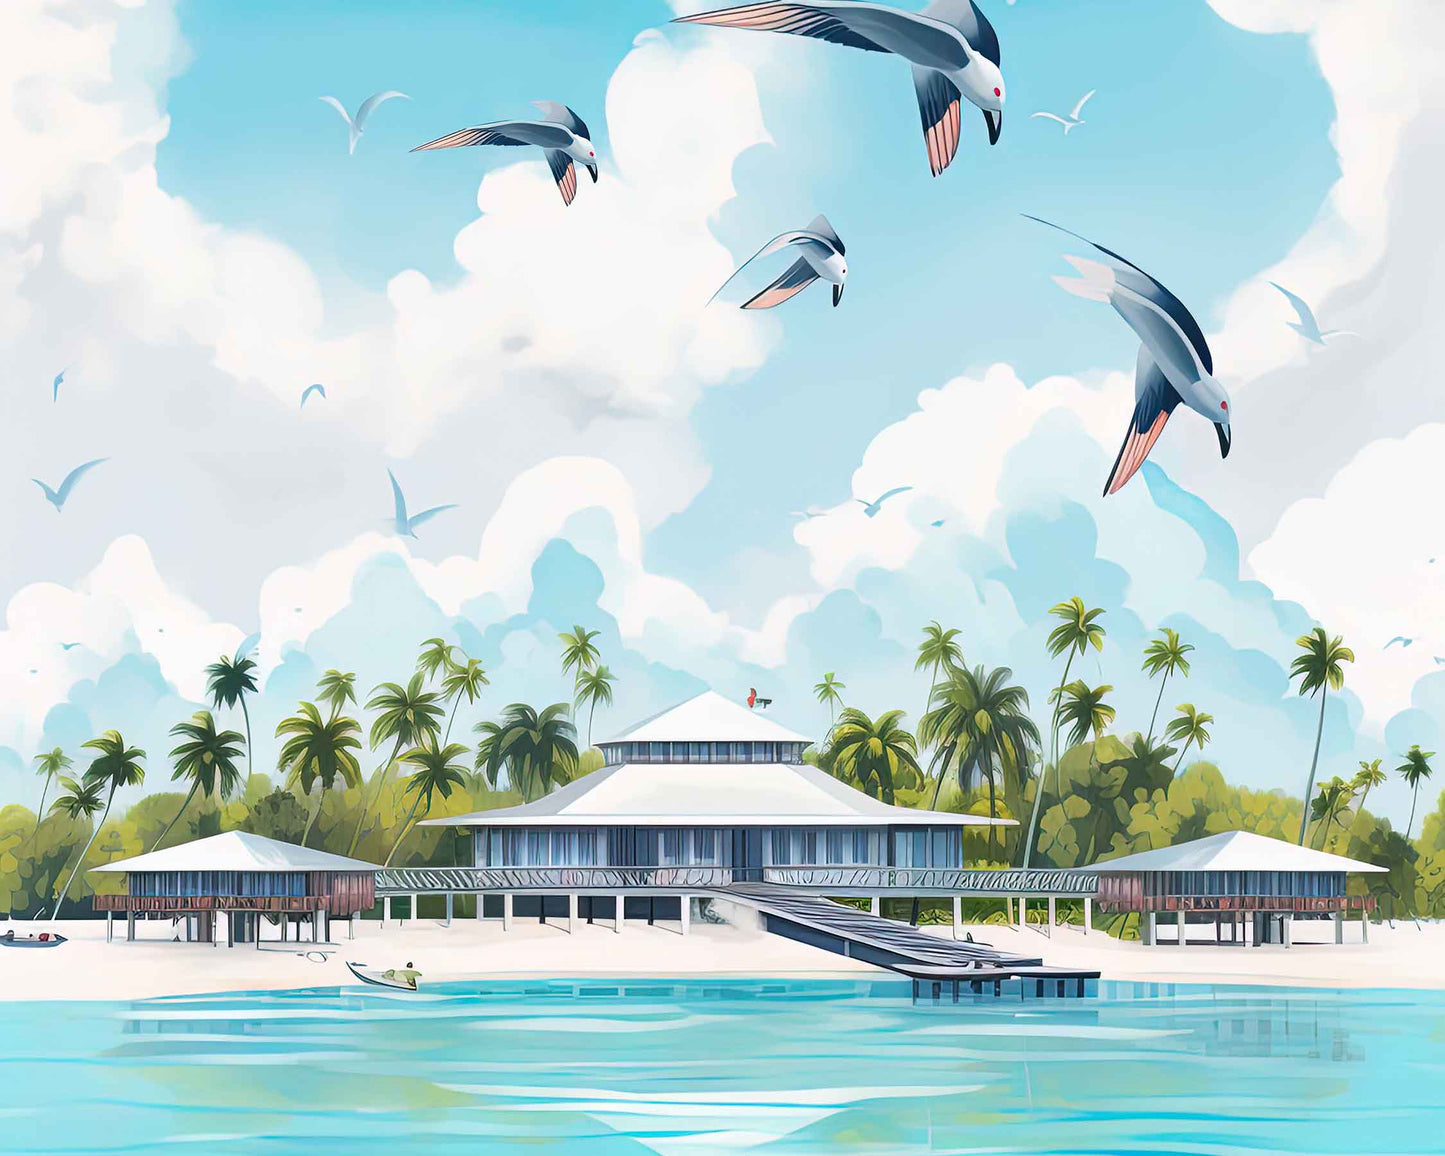 Framed Image of Maldives Travel Illustration Posters Wall Art Tropical Prints